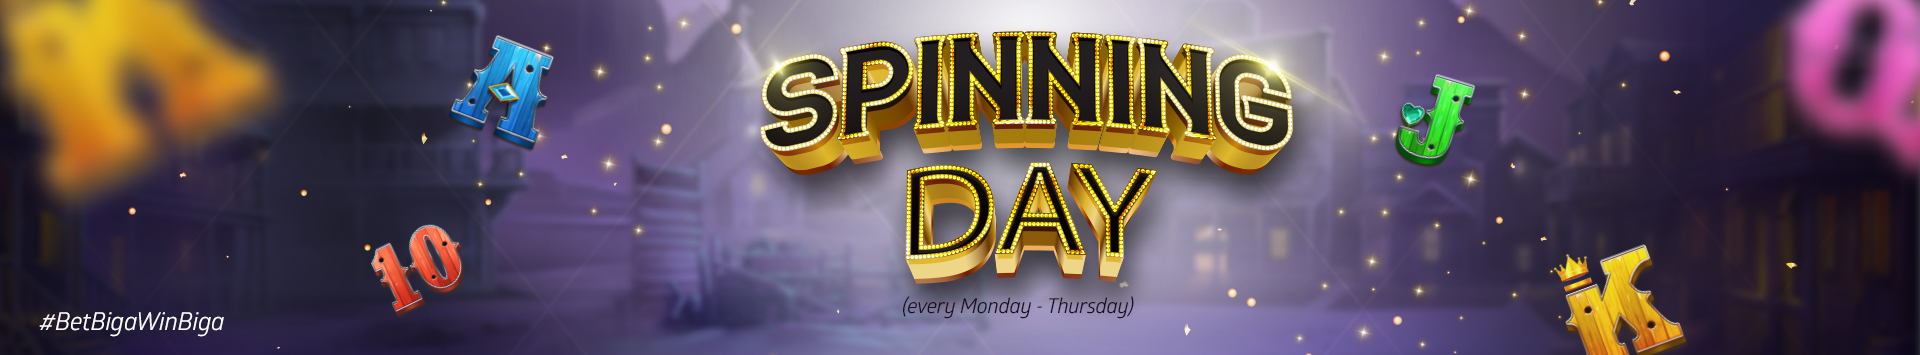 Spinning Day